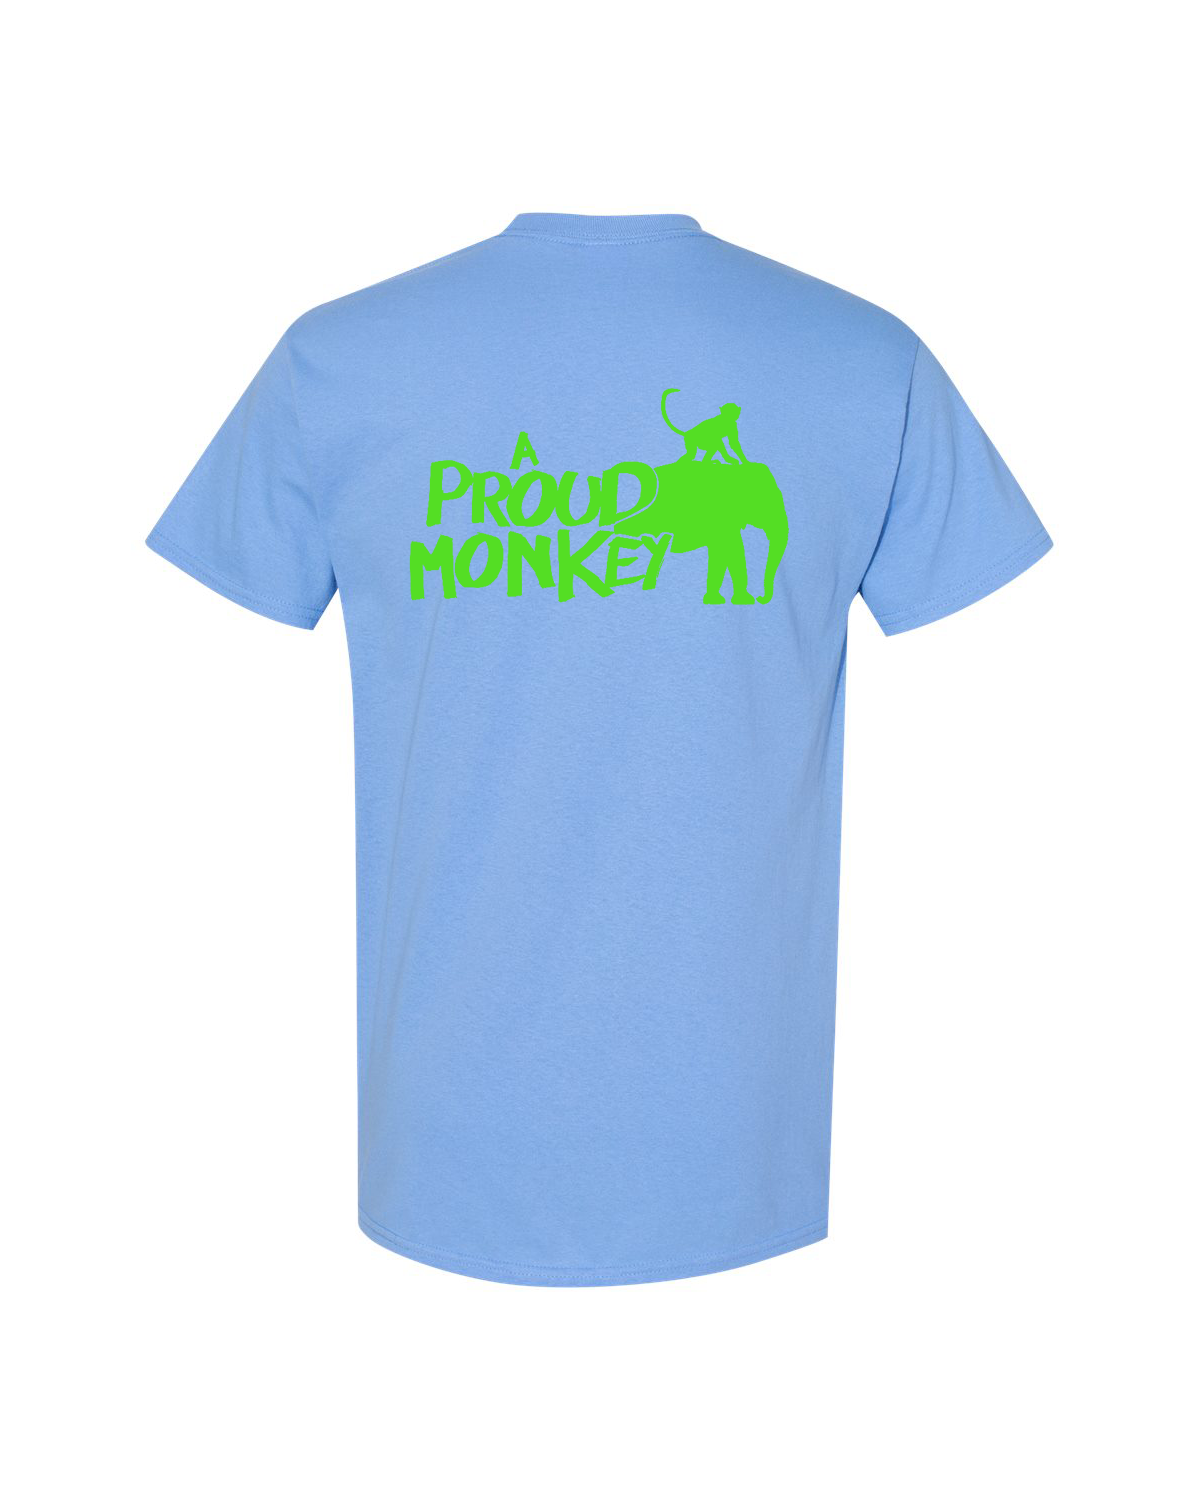 A Proud Monkey - Columbian Blue T-Shirt